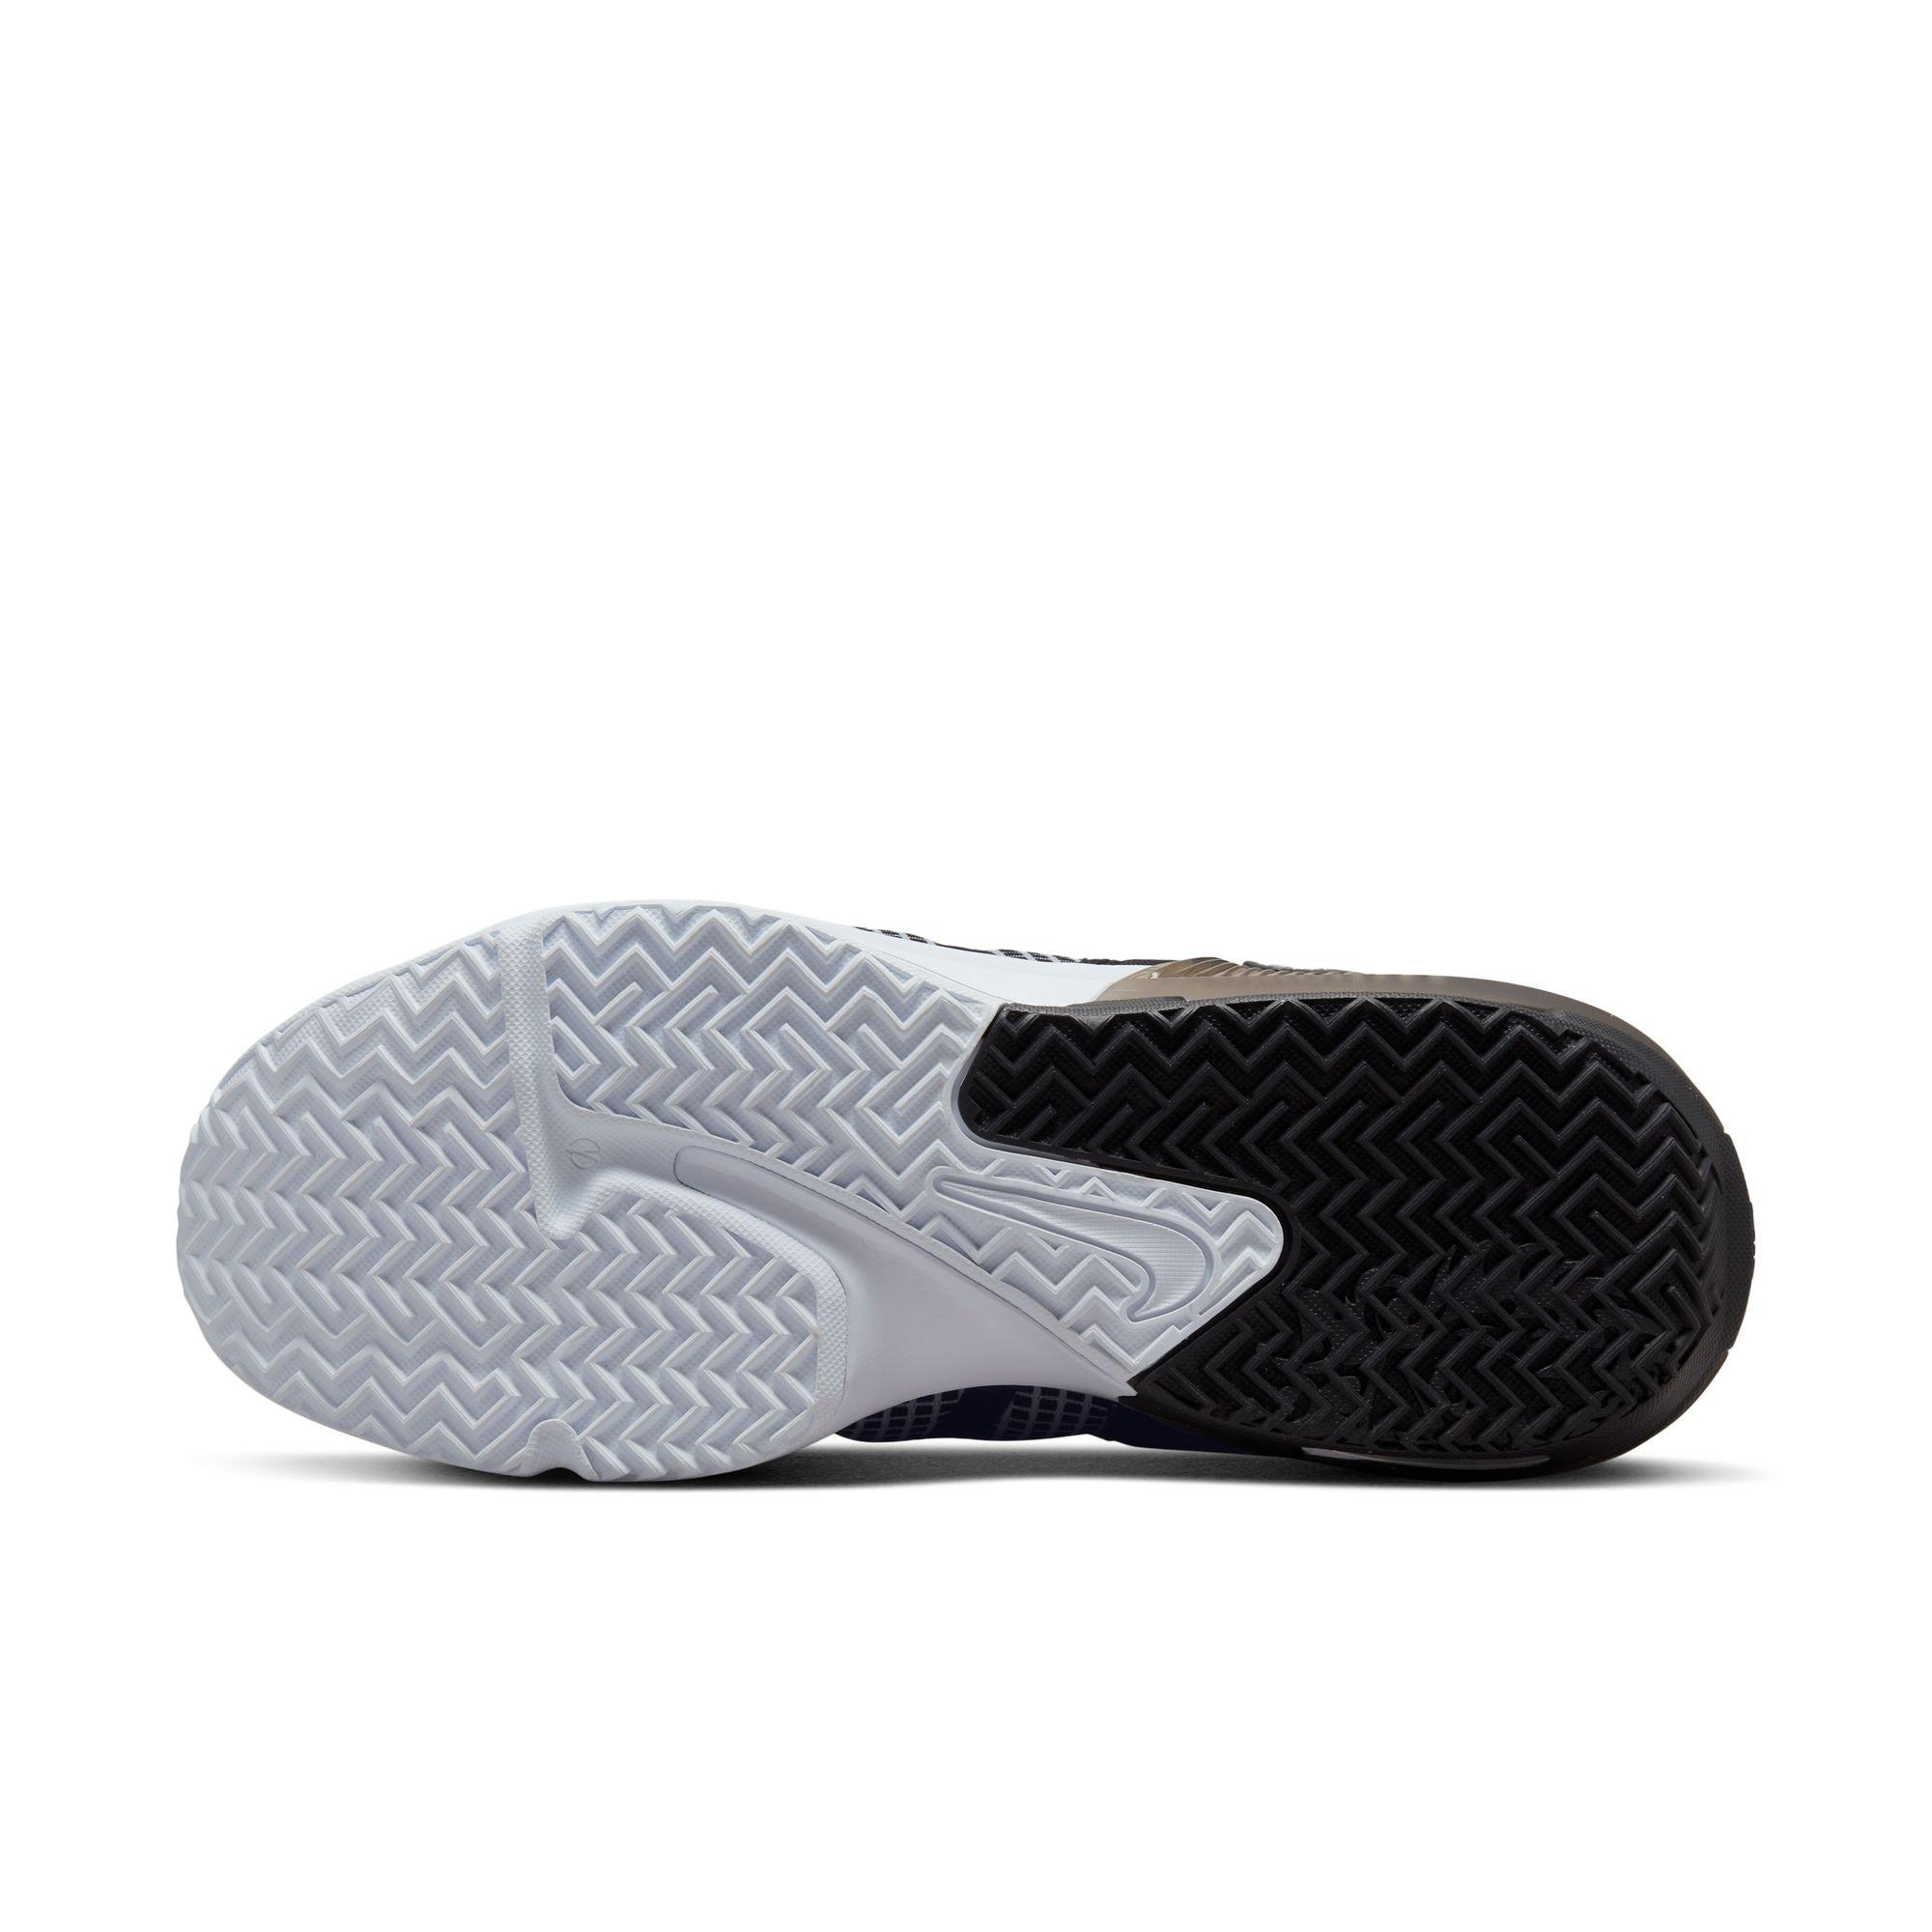 Nike Mens Lebron James LeBron VII Basketball Shoes, Chlorine Blue/Black, Size 7.5